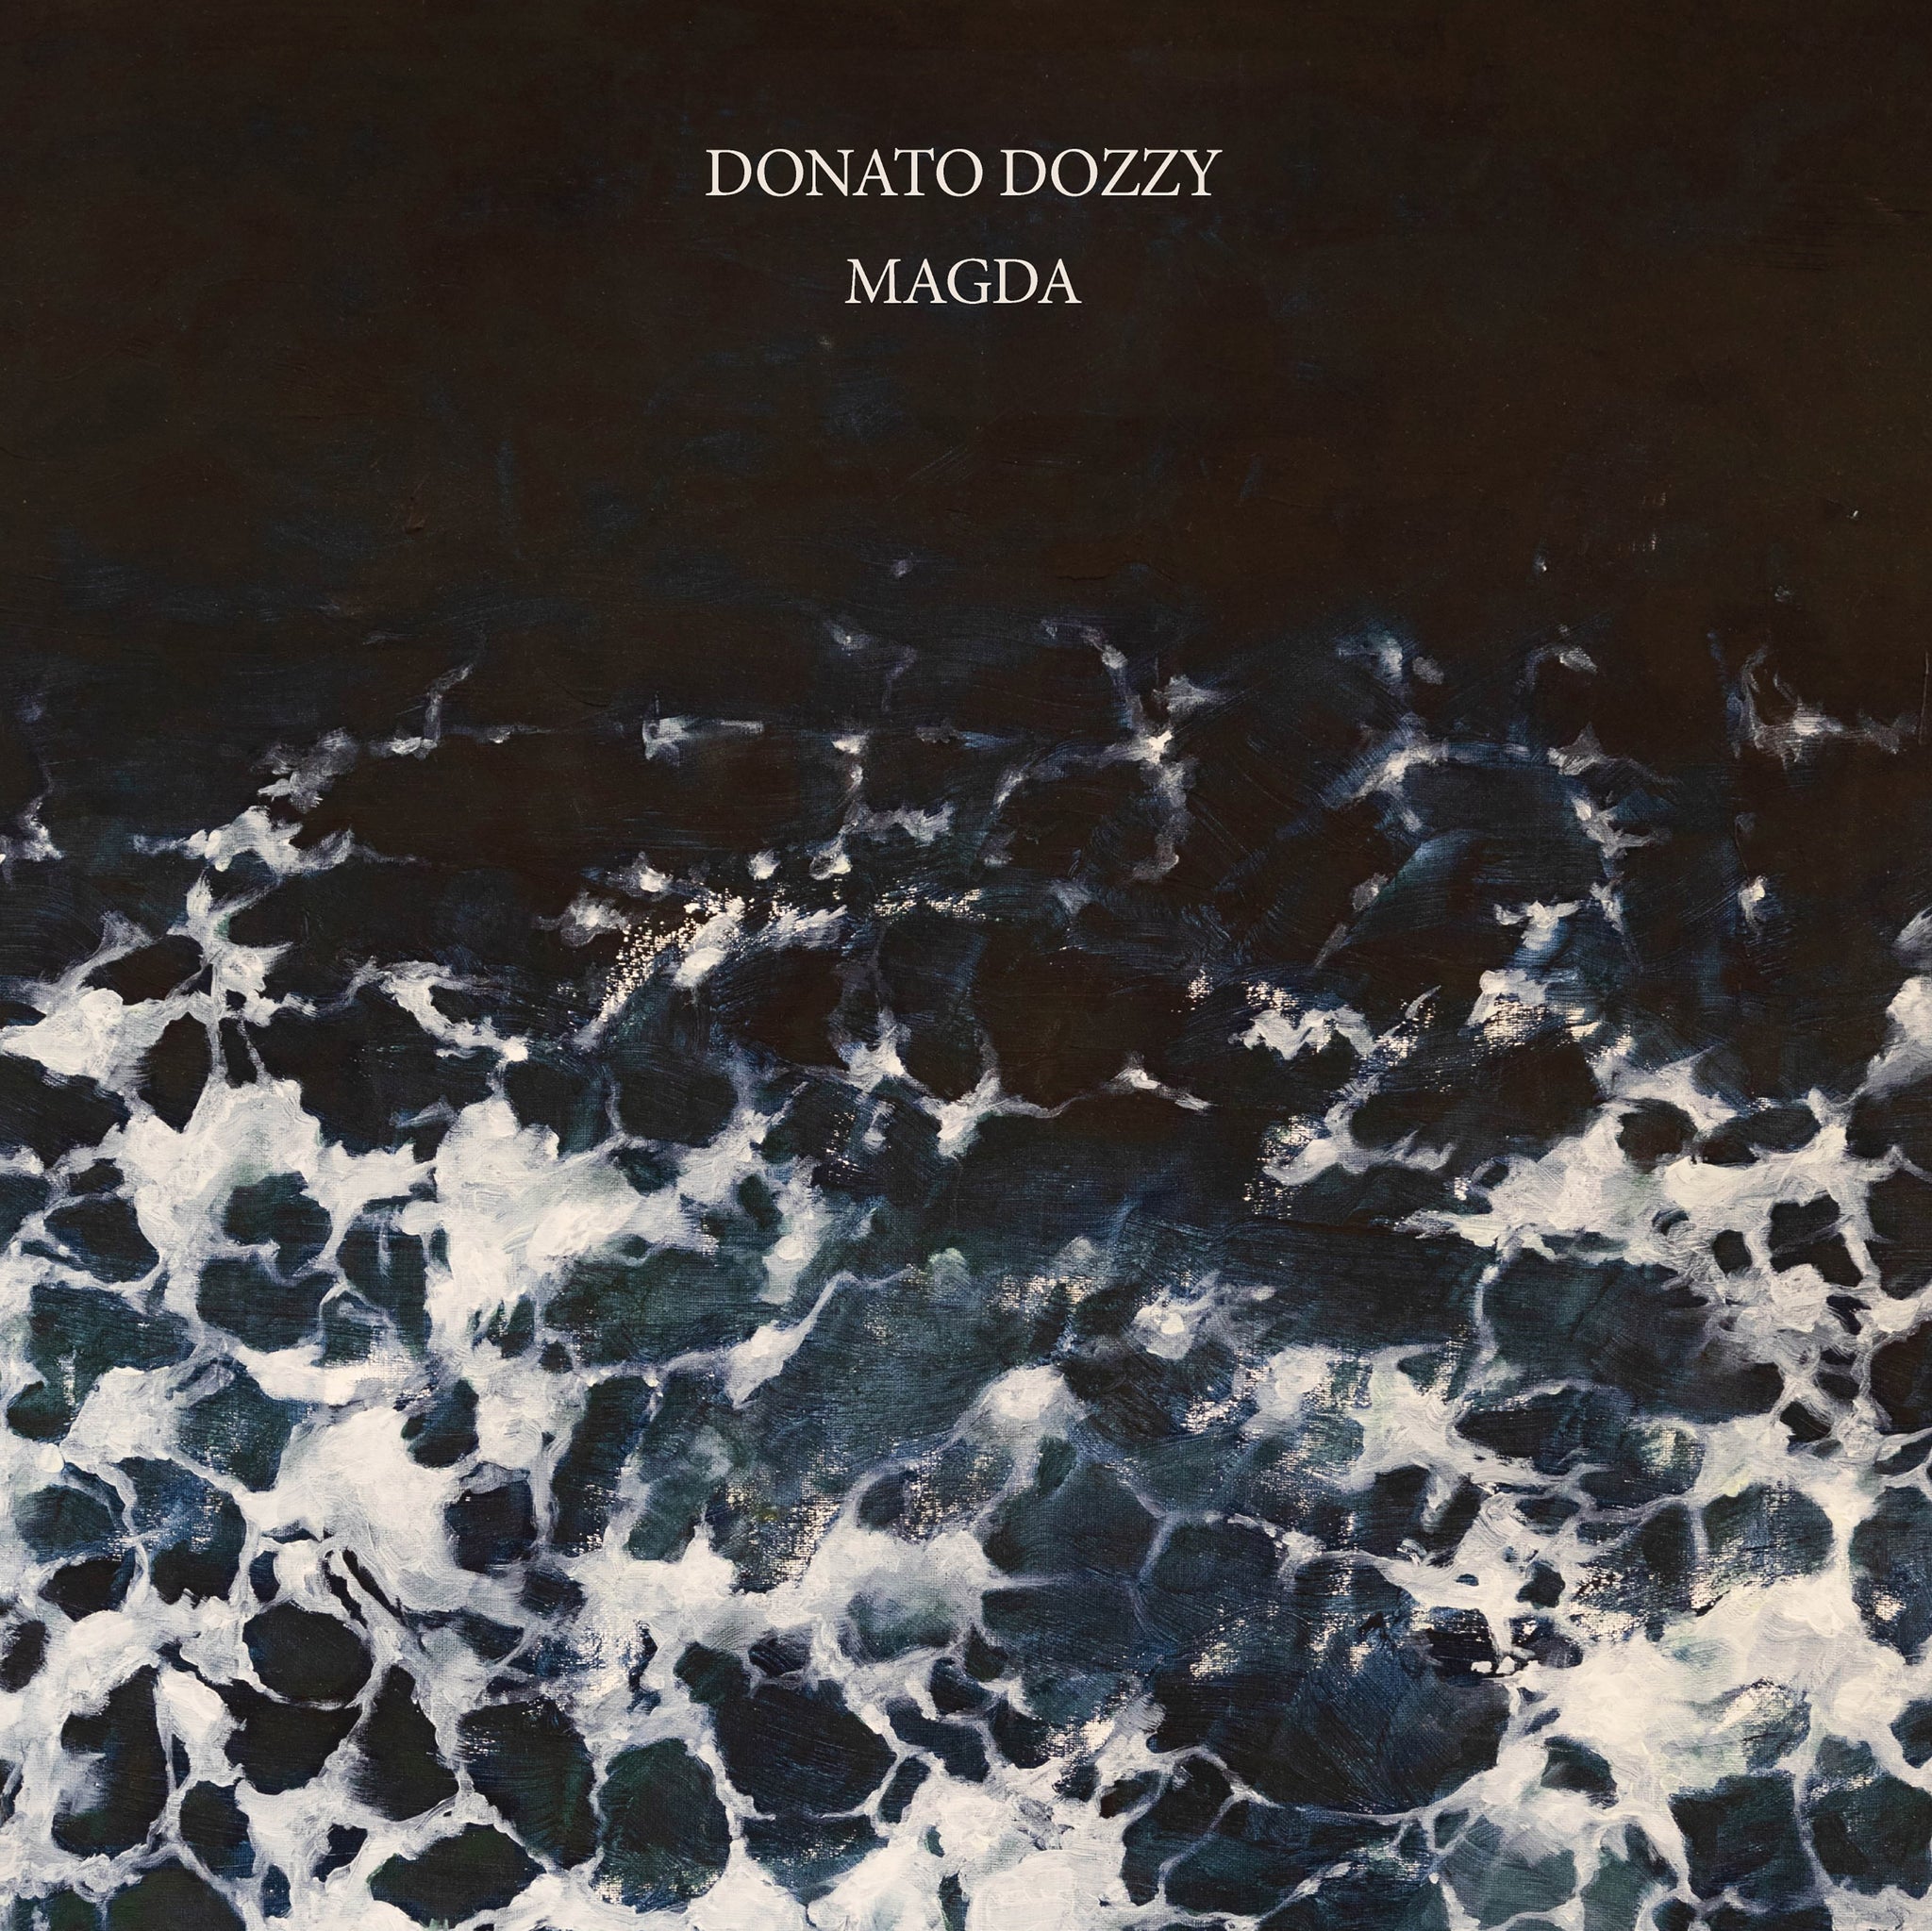 *PRE-ORDER* Donato Dozzy 'Magda' 2x12"